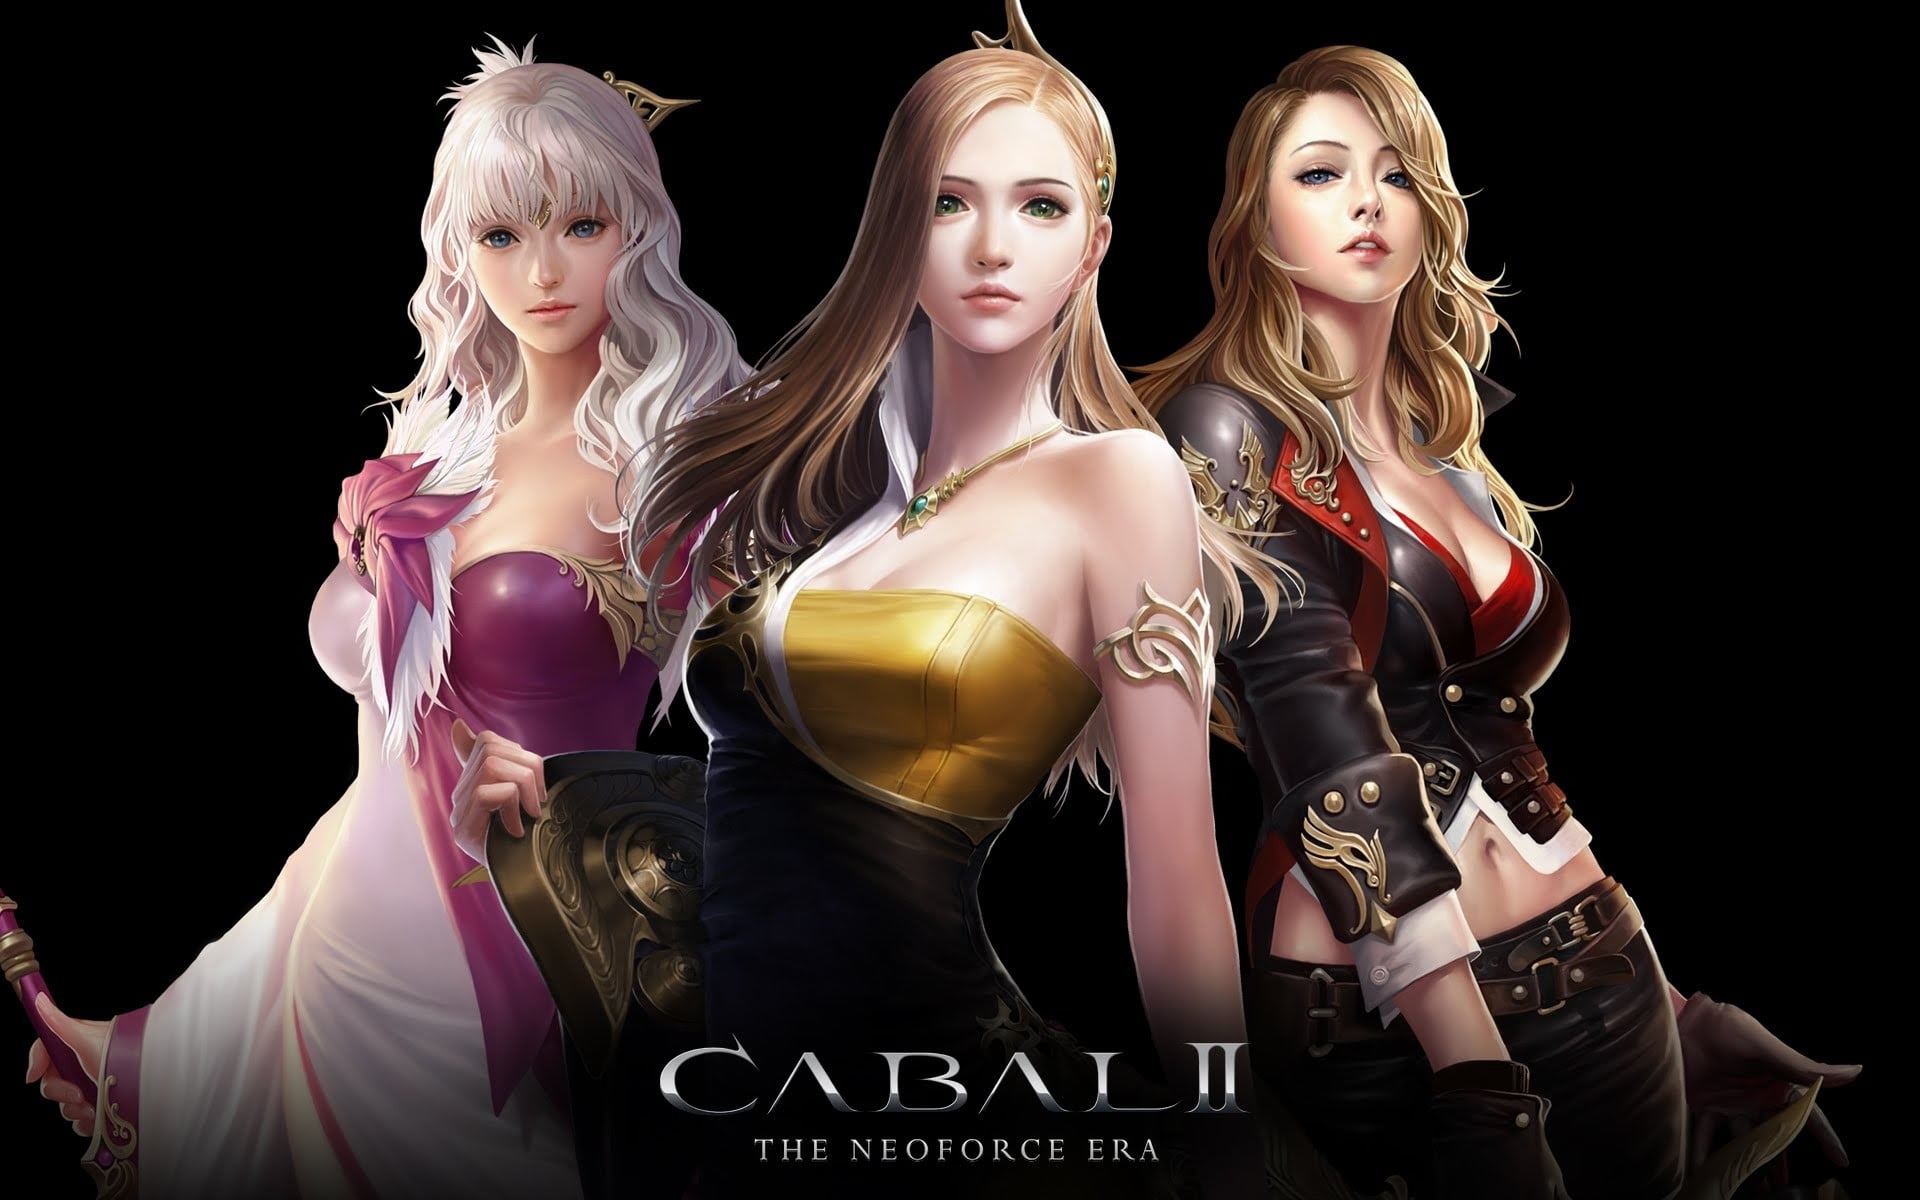 cabal, video games, anime girls, big boobs, Cabal II, fantasy girl